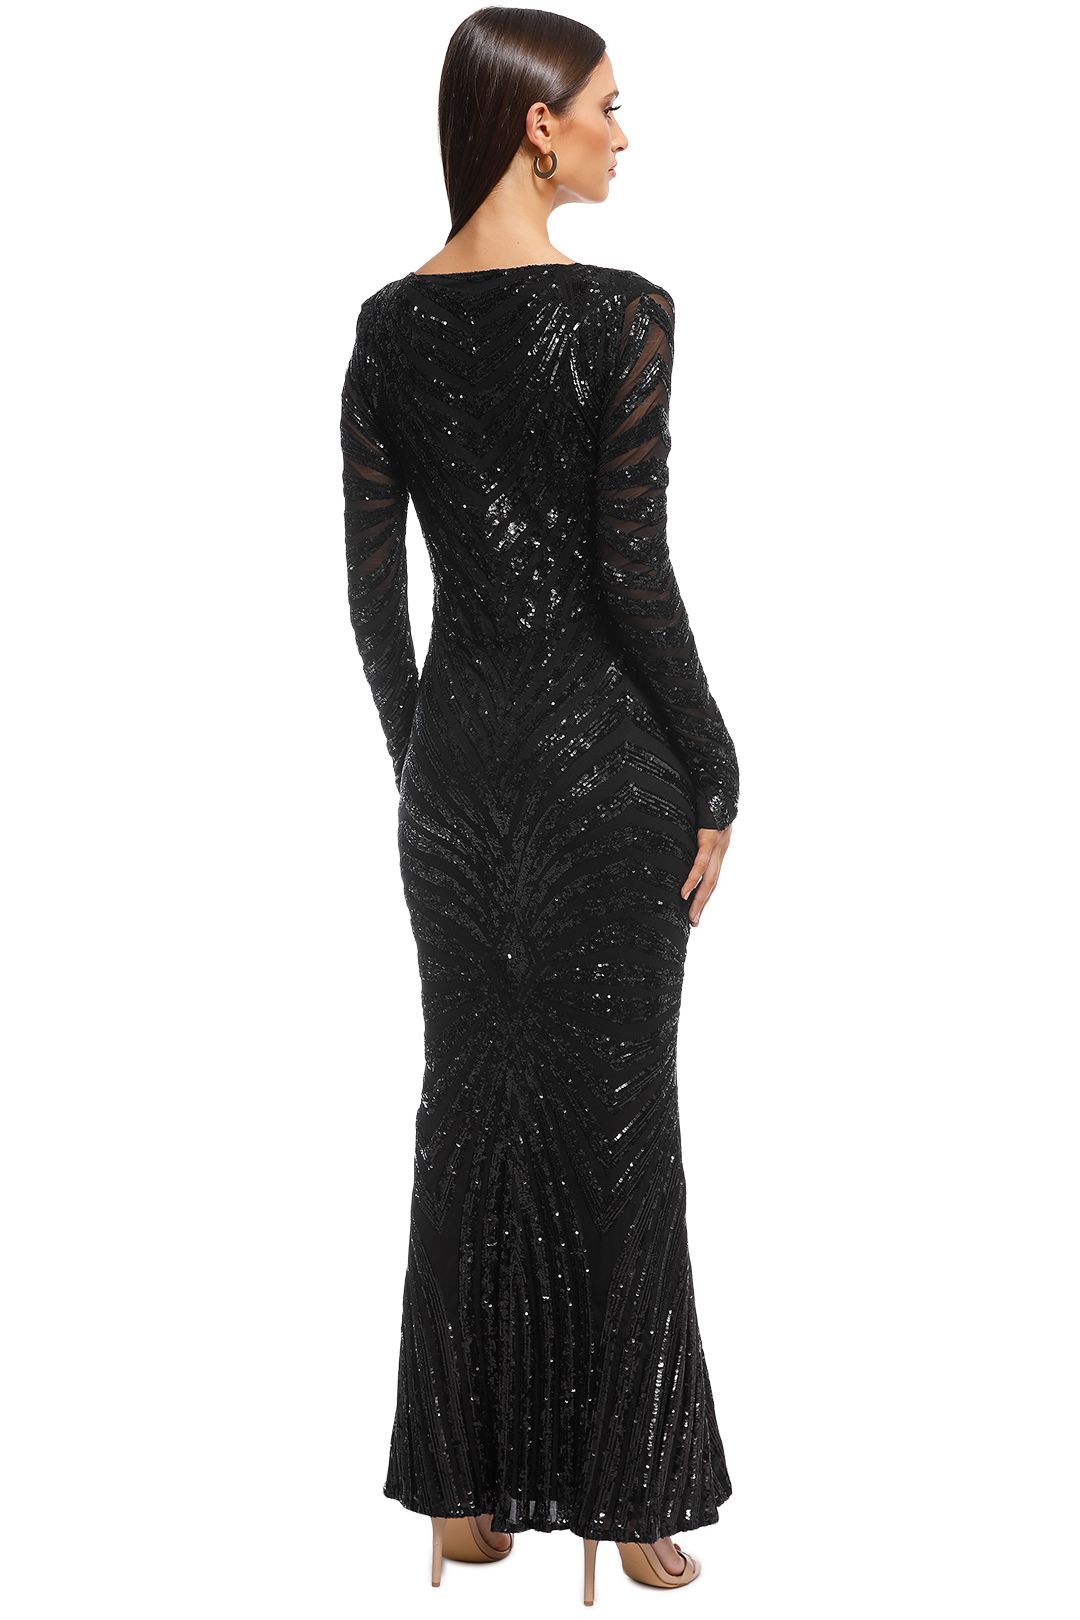 Ae'lkemi - Art Deco Sequin Gown - Black - Back